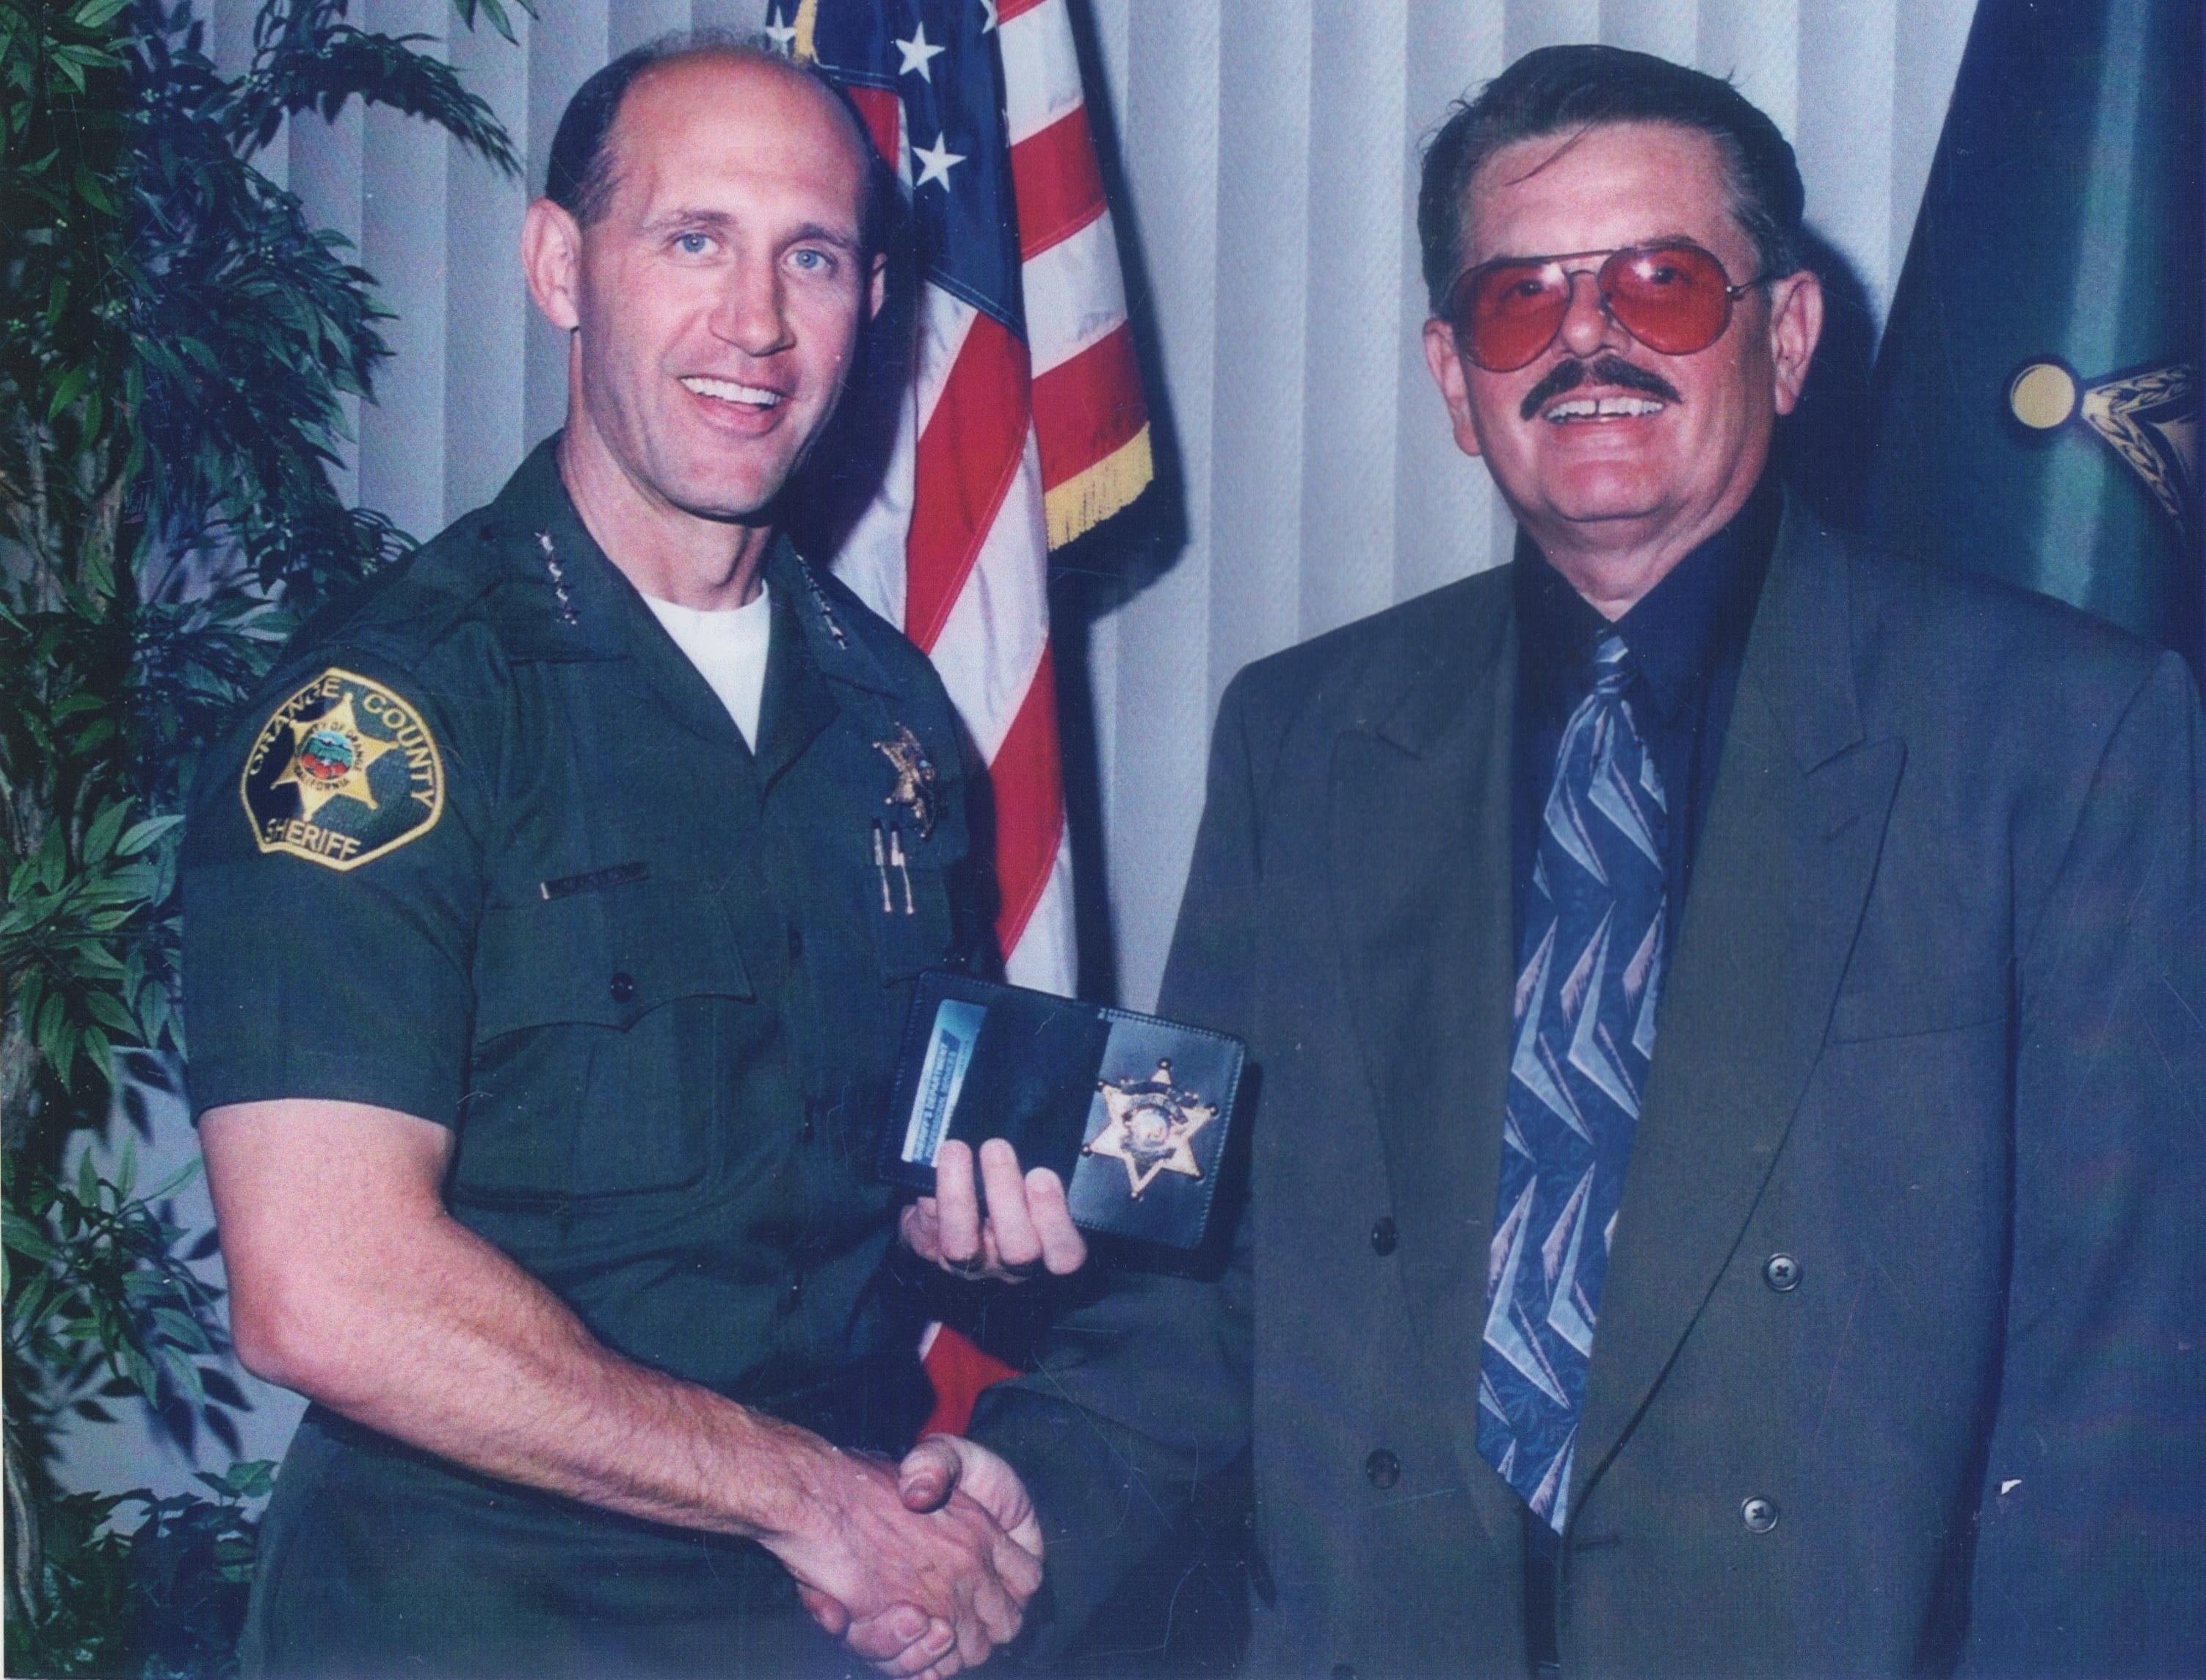 Reserve Deputy Sheriff Lew Richard